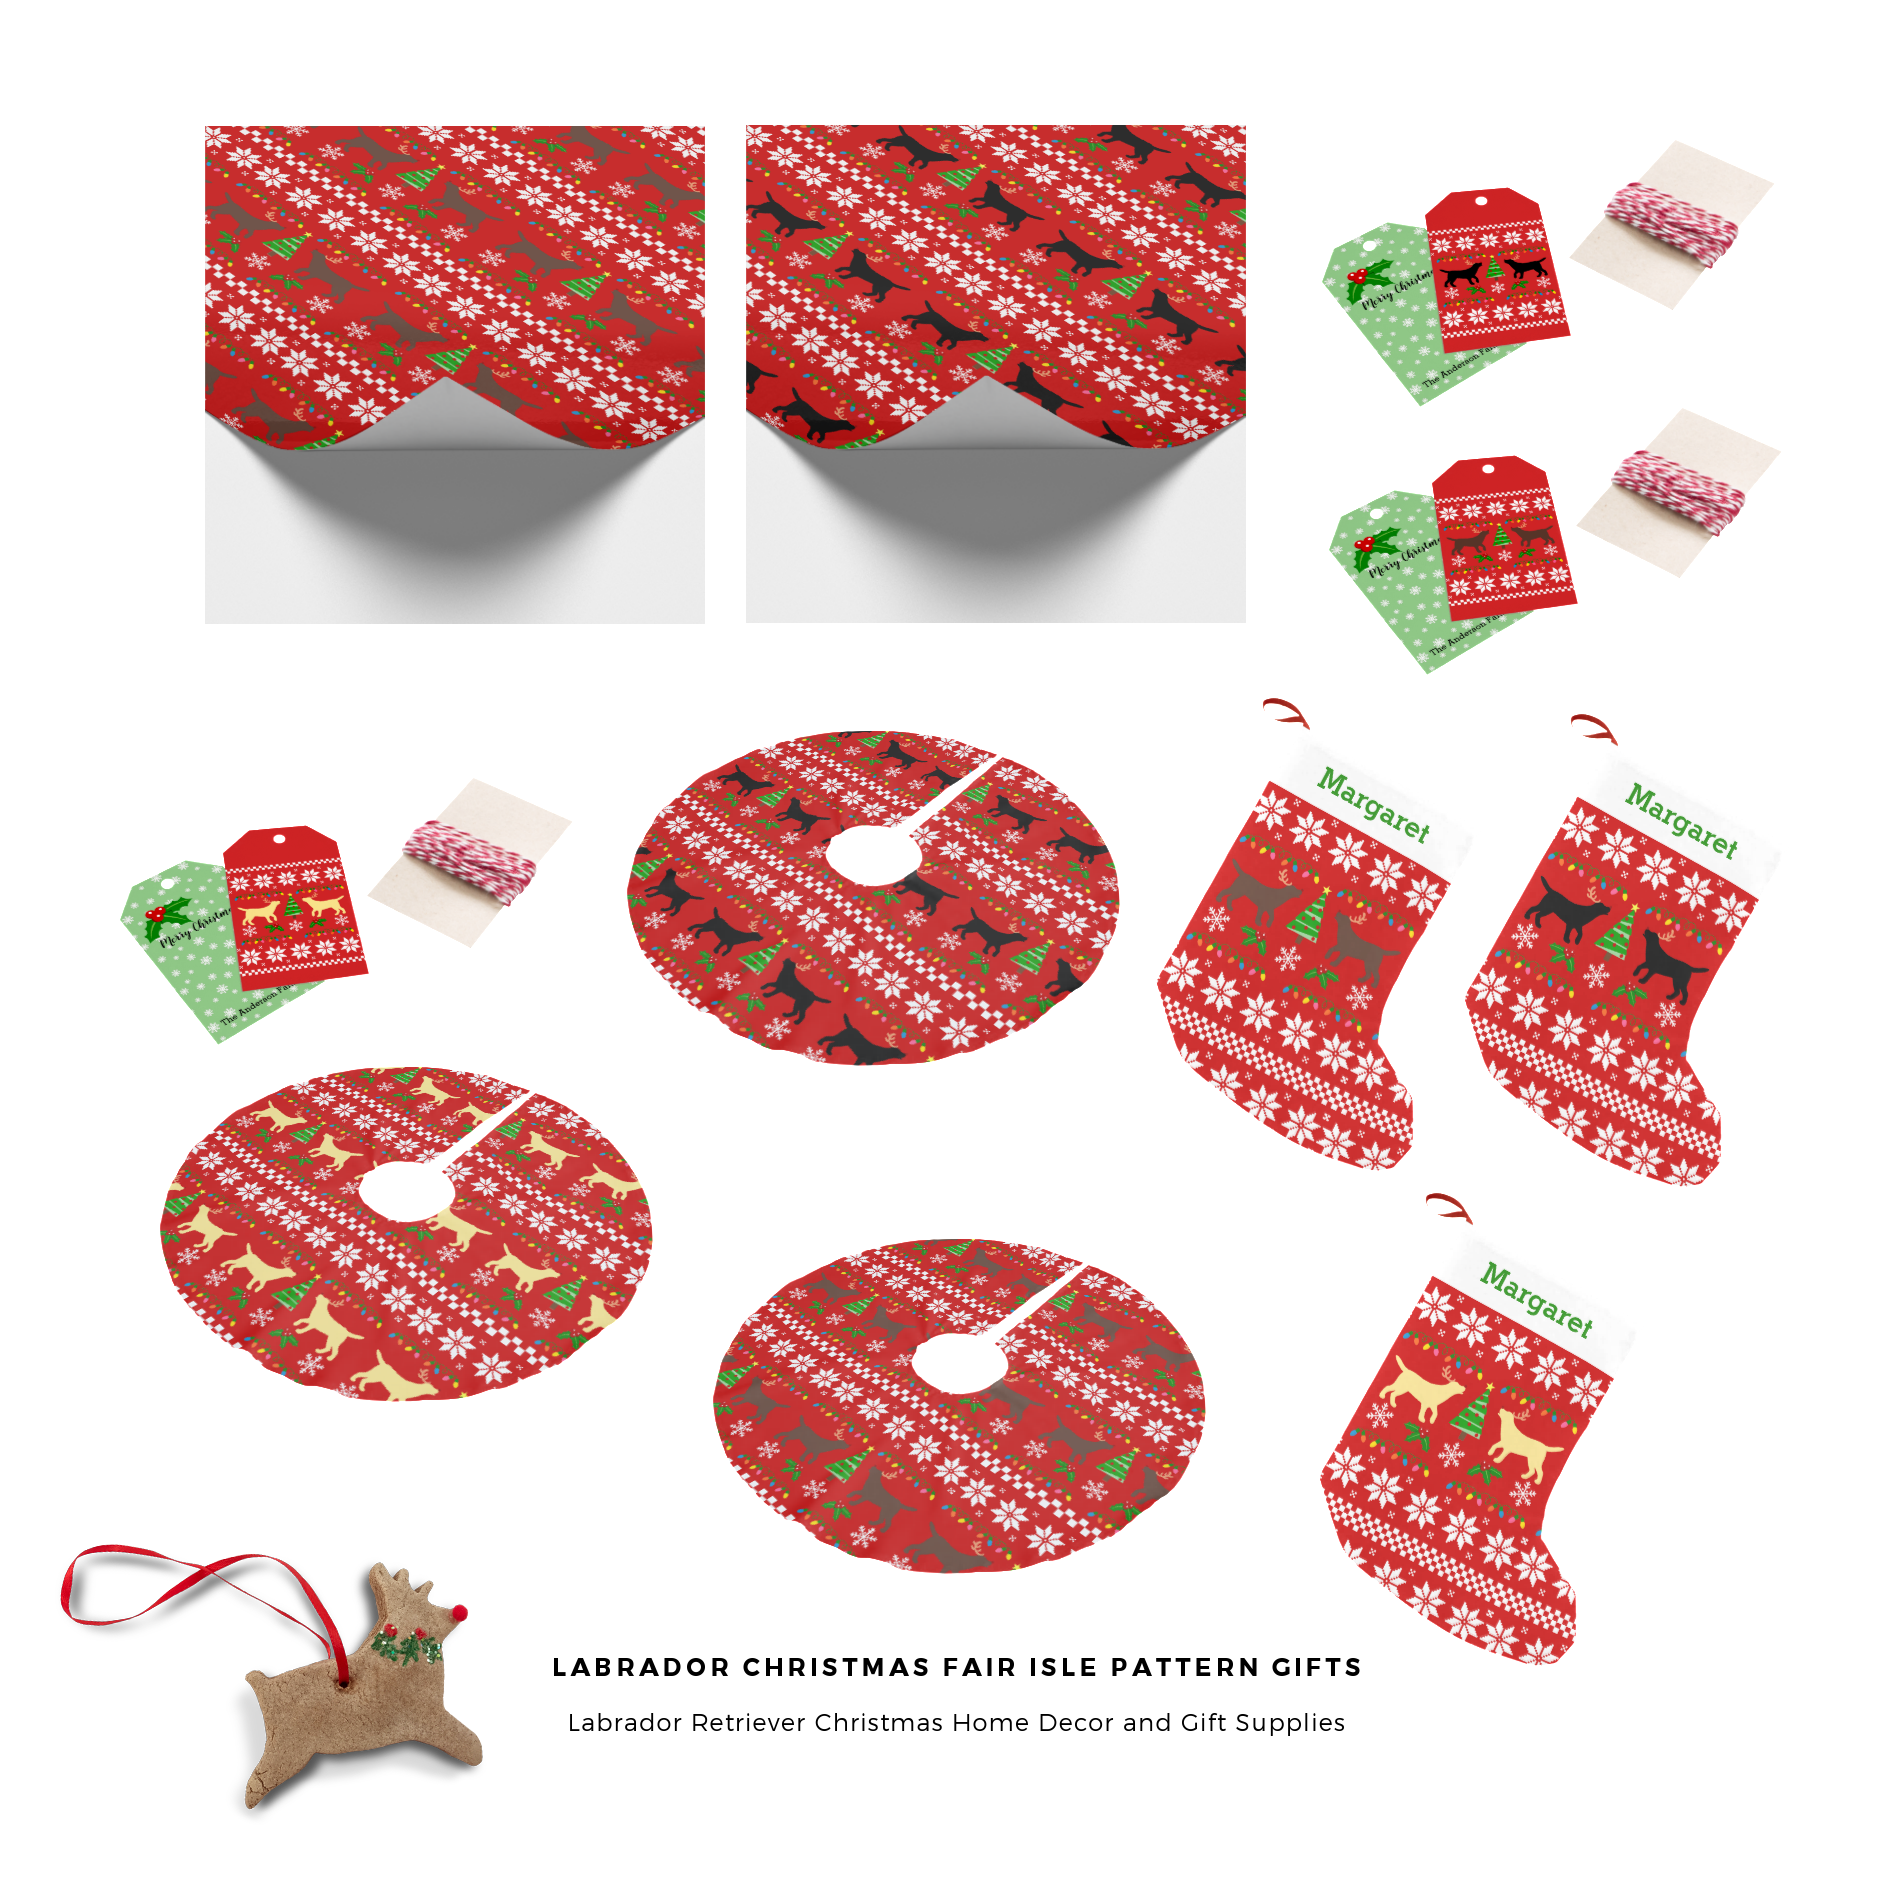 Christmas Labrador Retriever Fair Isle Pattern Gift Ideas by HappyLabradors @zazzle